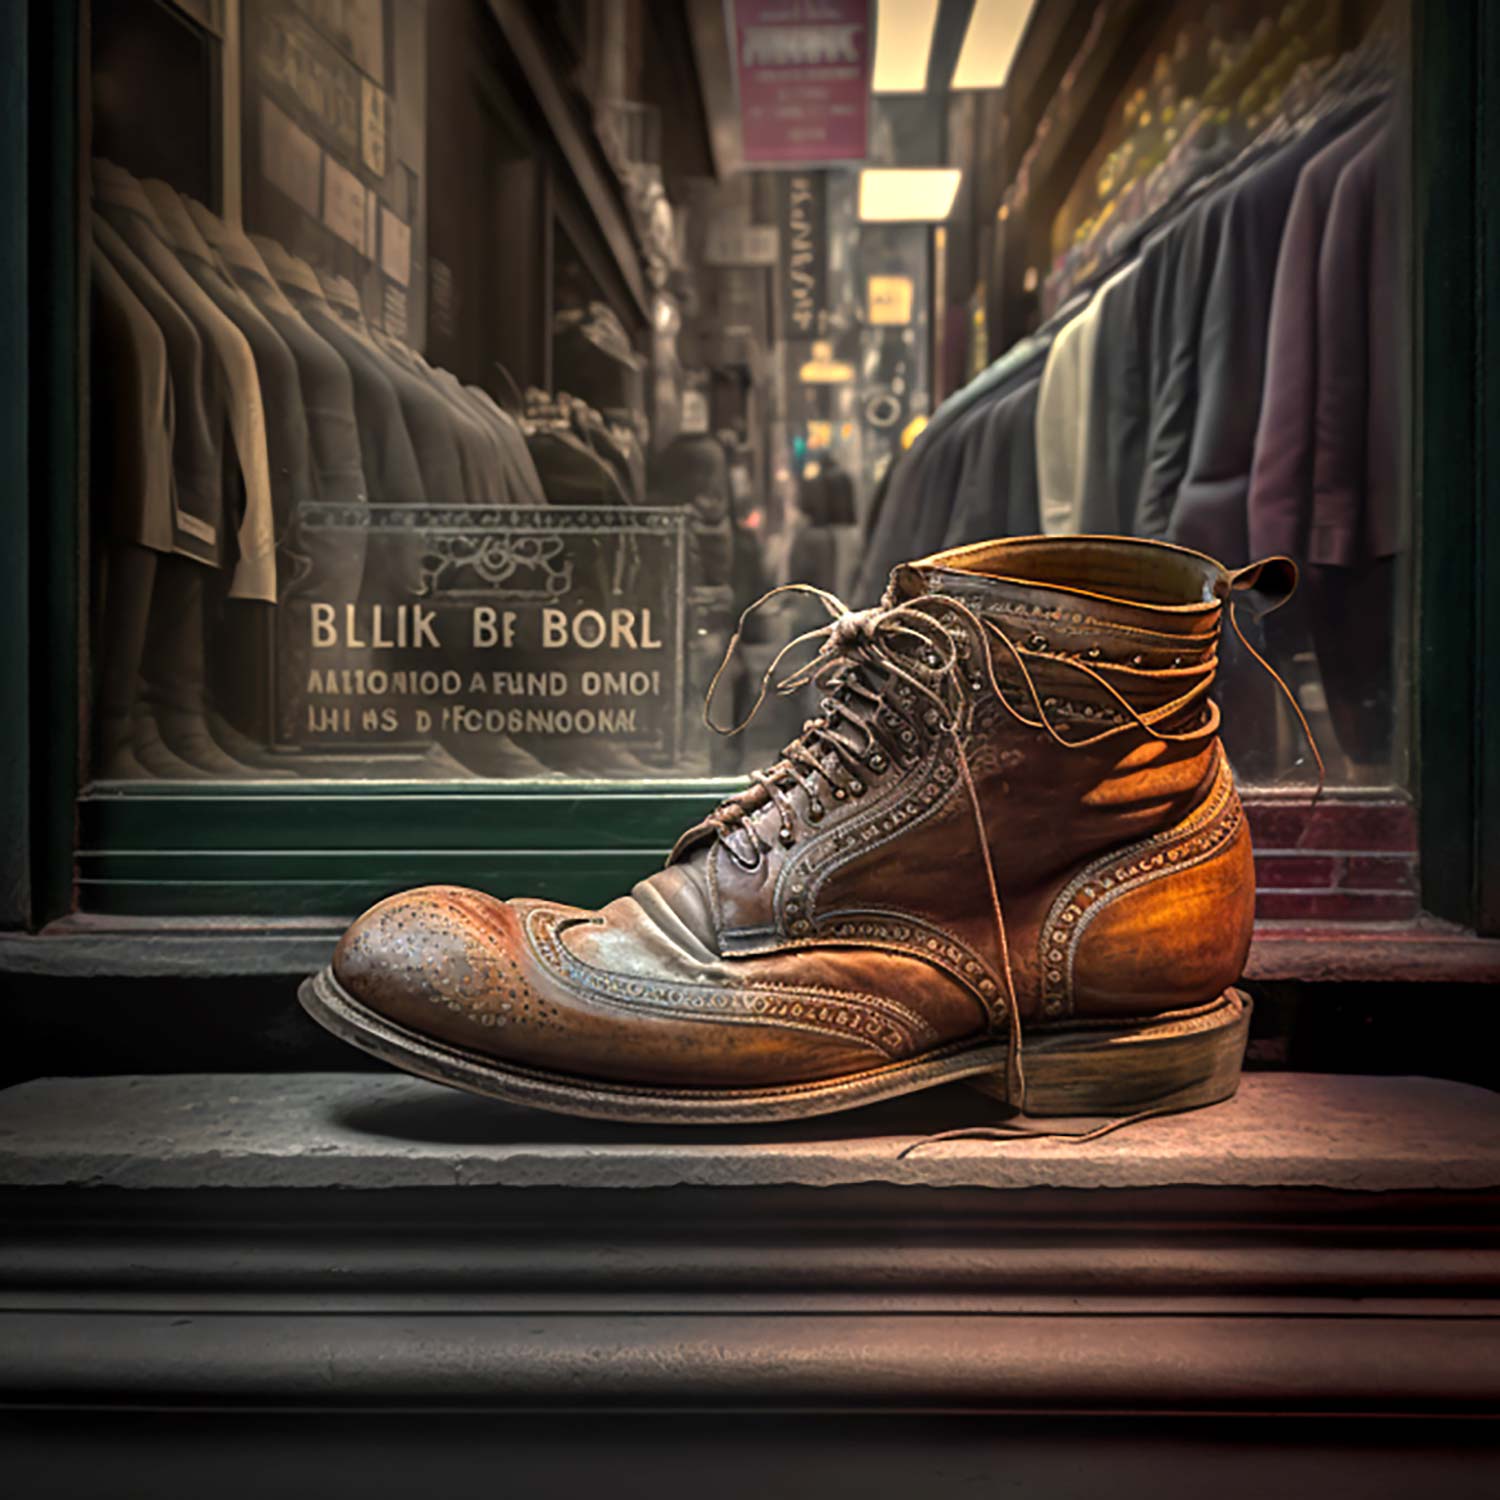 This image shows an illustration of a Ralph Lauren men's shoe.